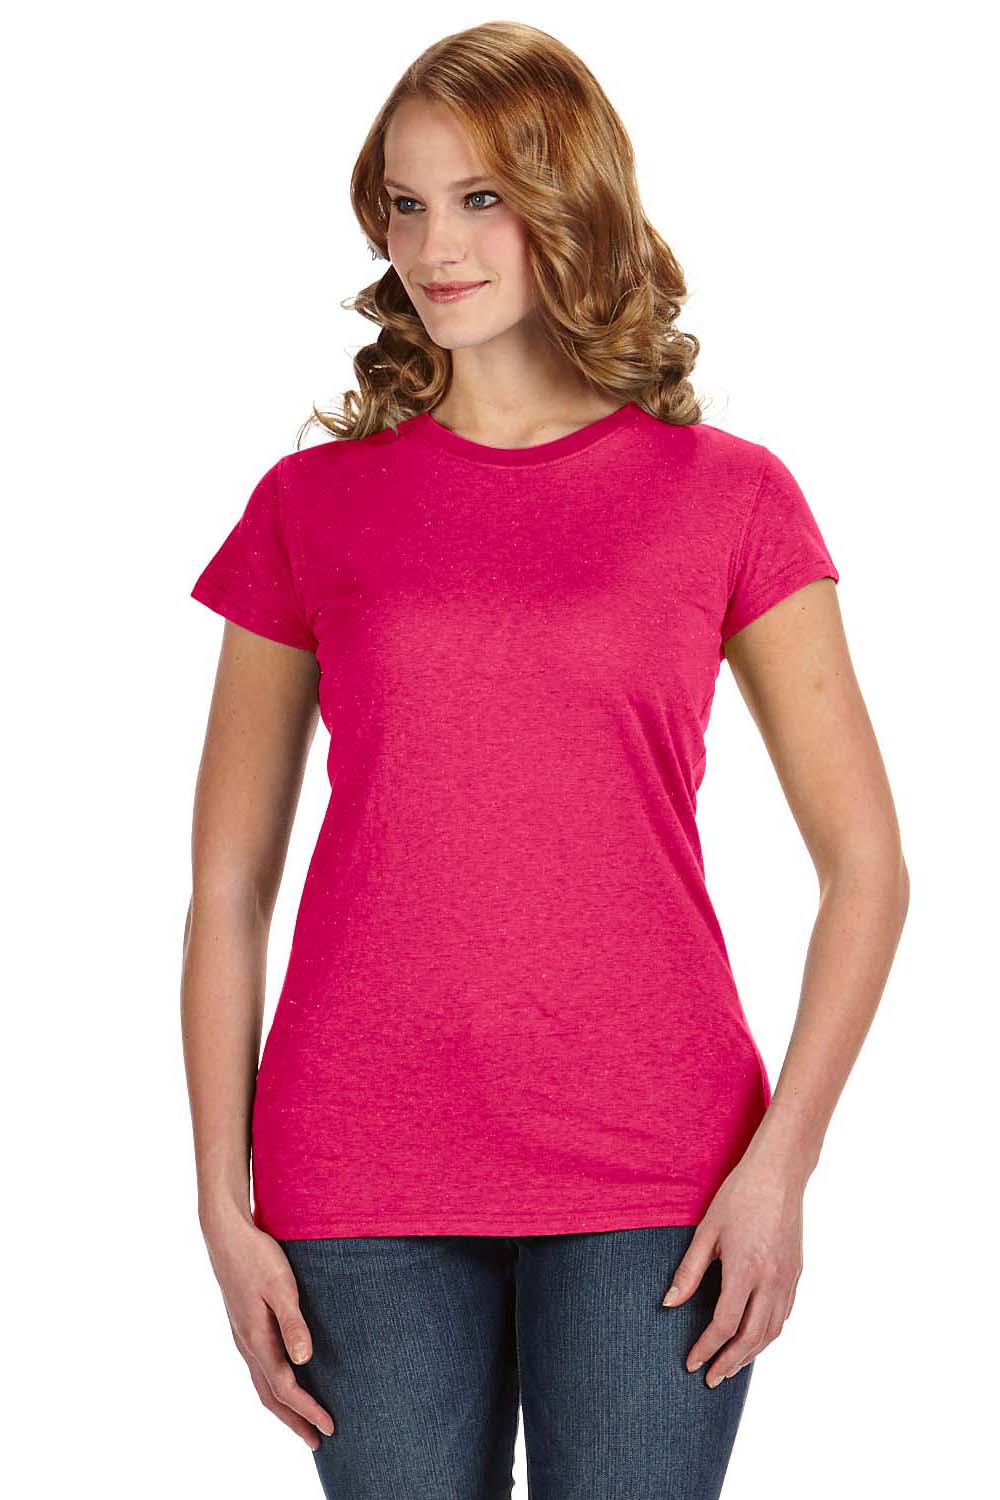 J America JA8138 Womens Glitter Short Sleeve Crewneck T-Shirt Wildberry Pink Front